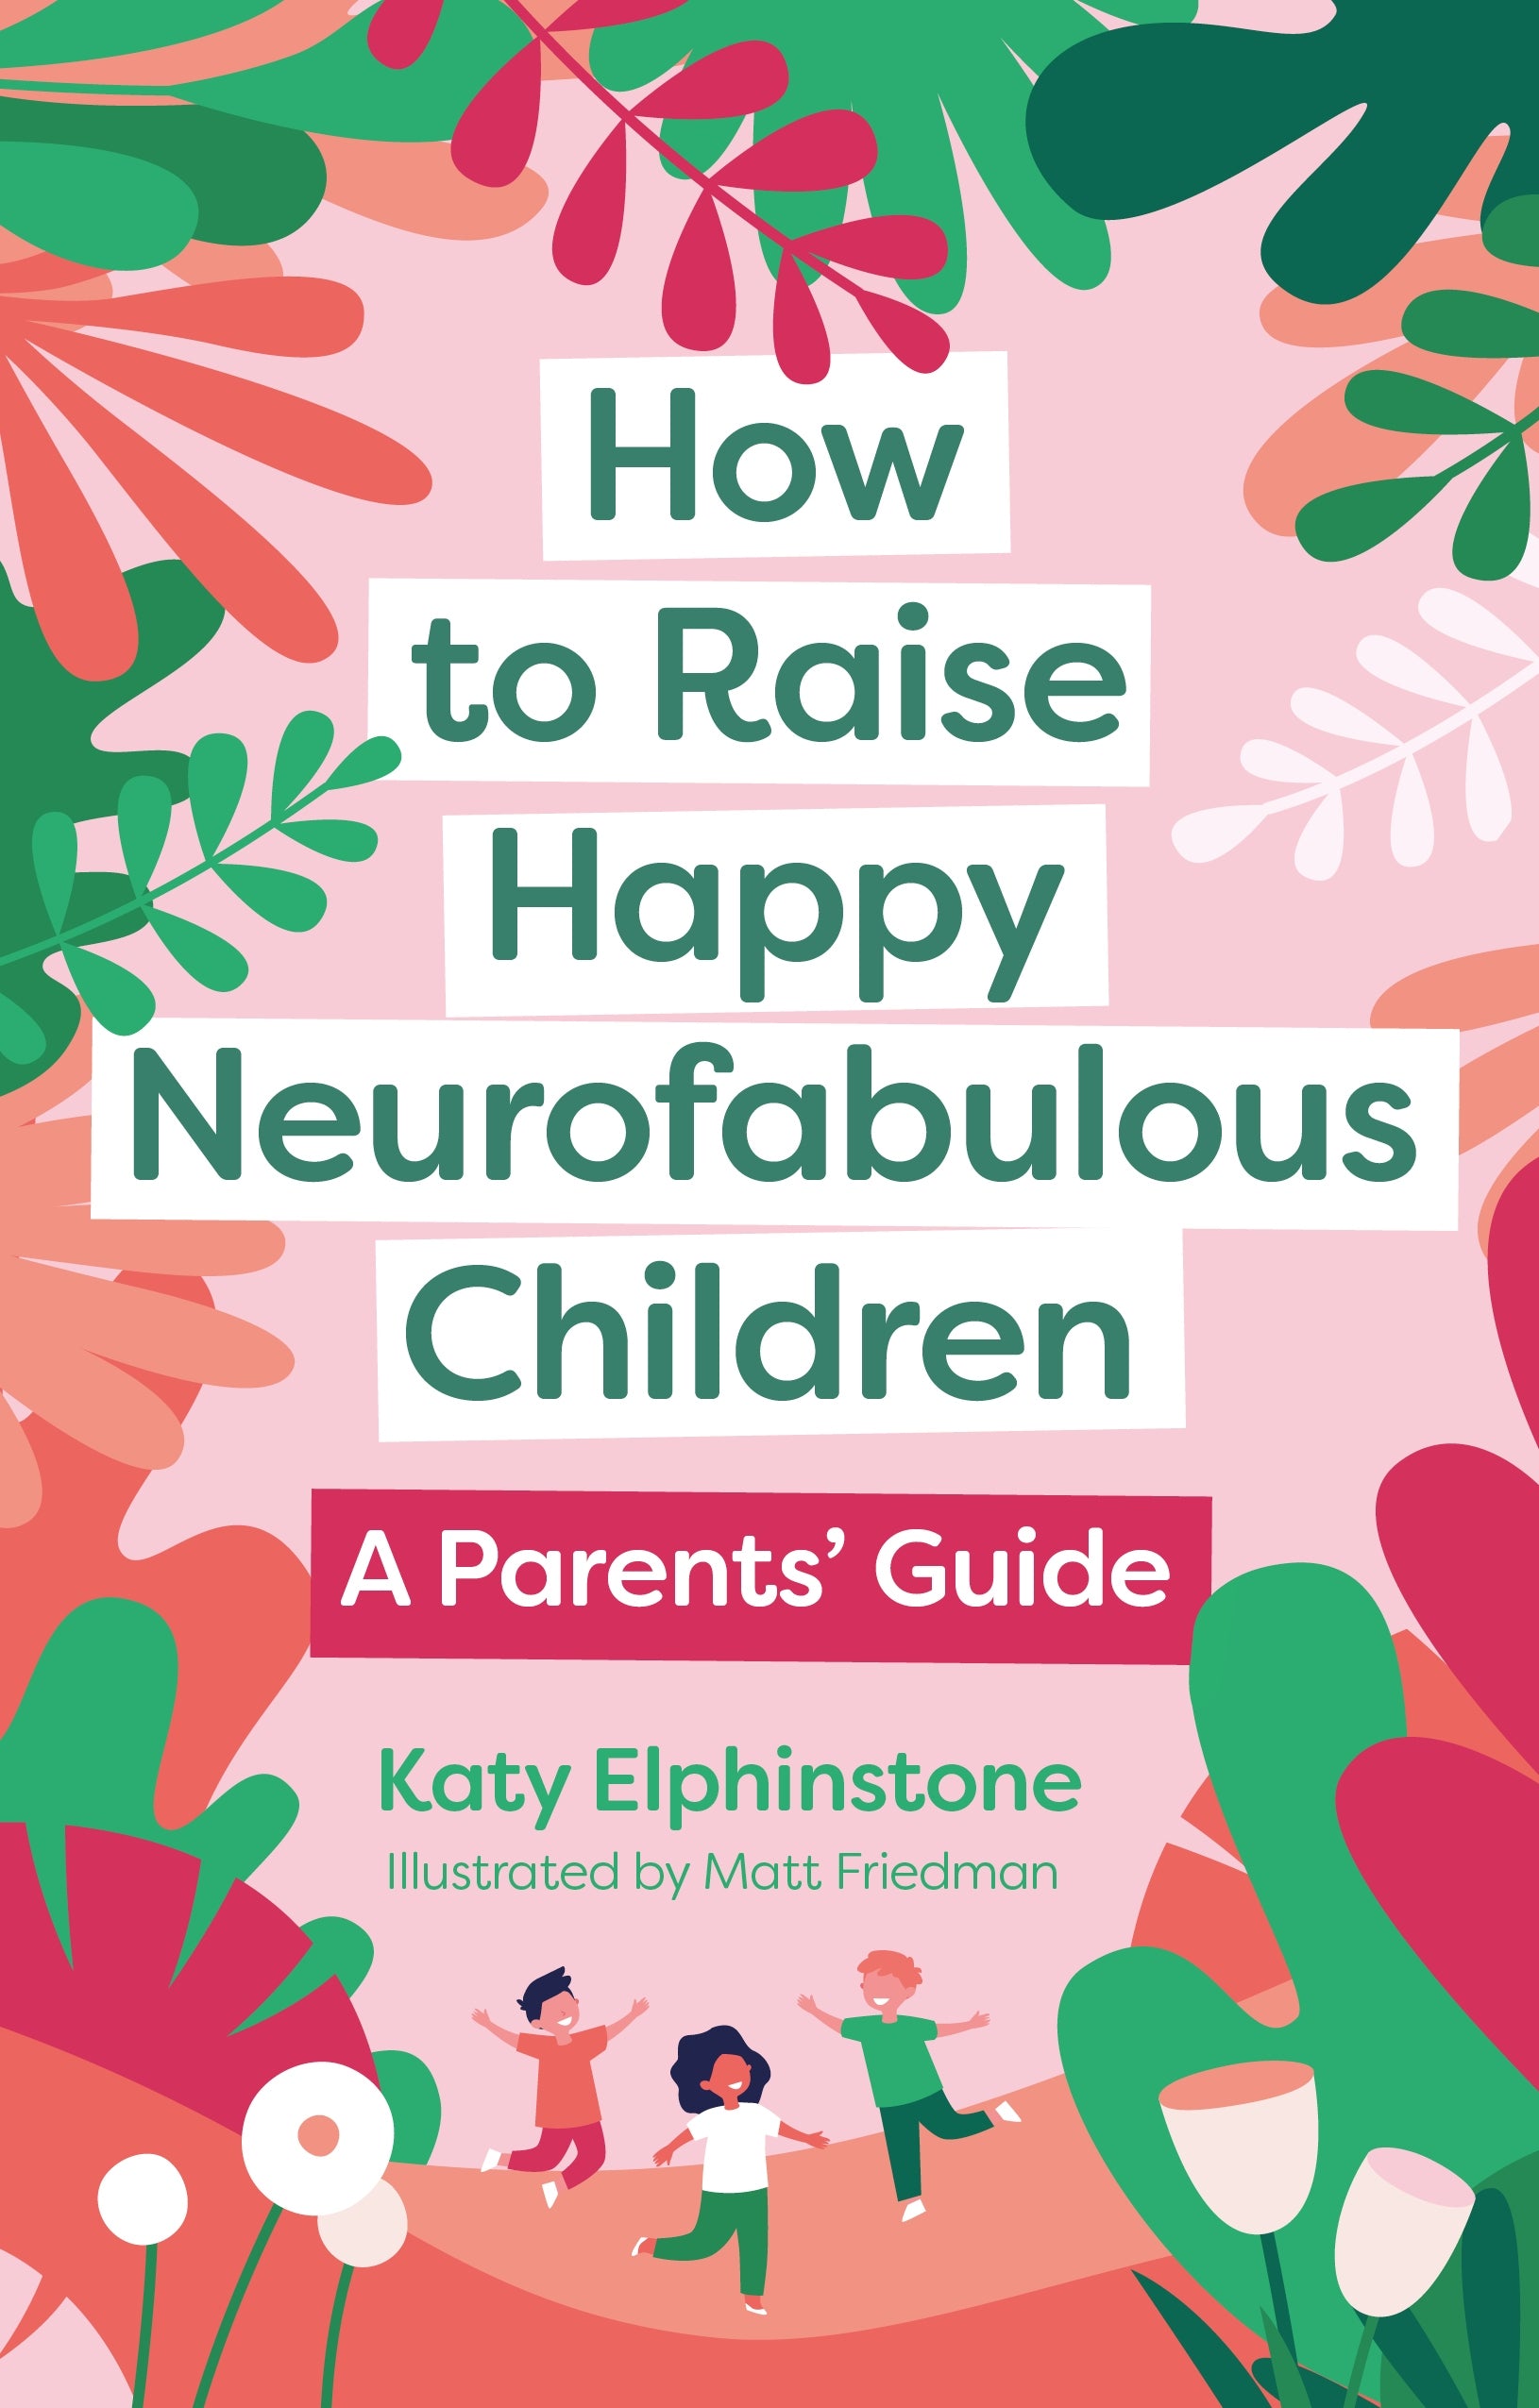 How to Raise Happy Neurofabulous Children by Katy Elphinstone